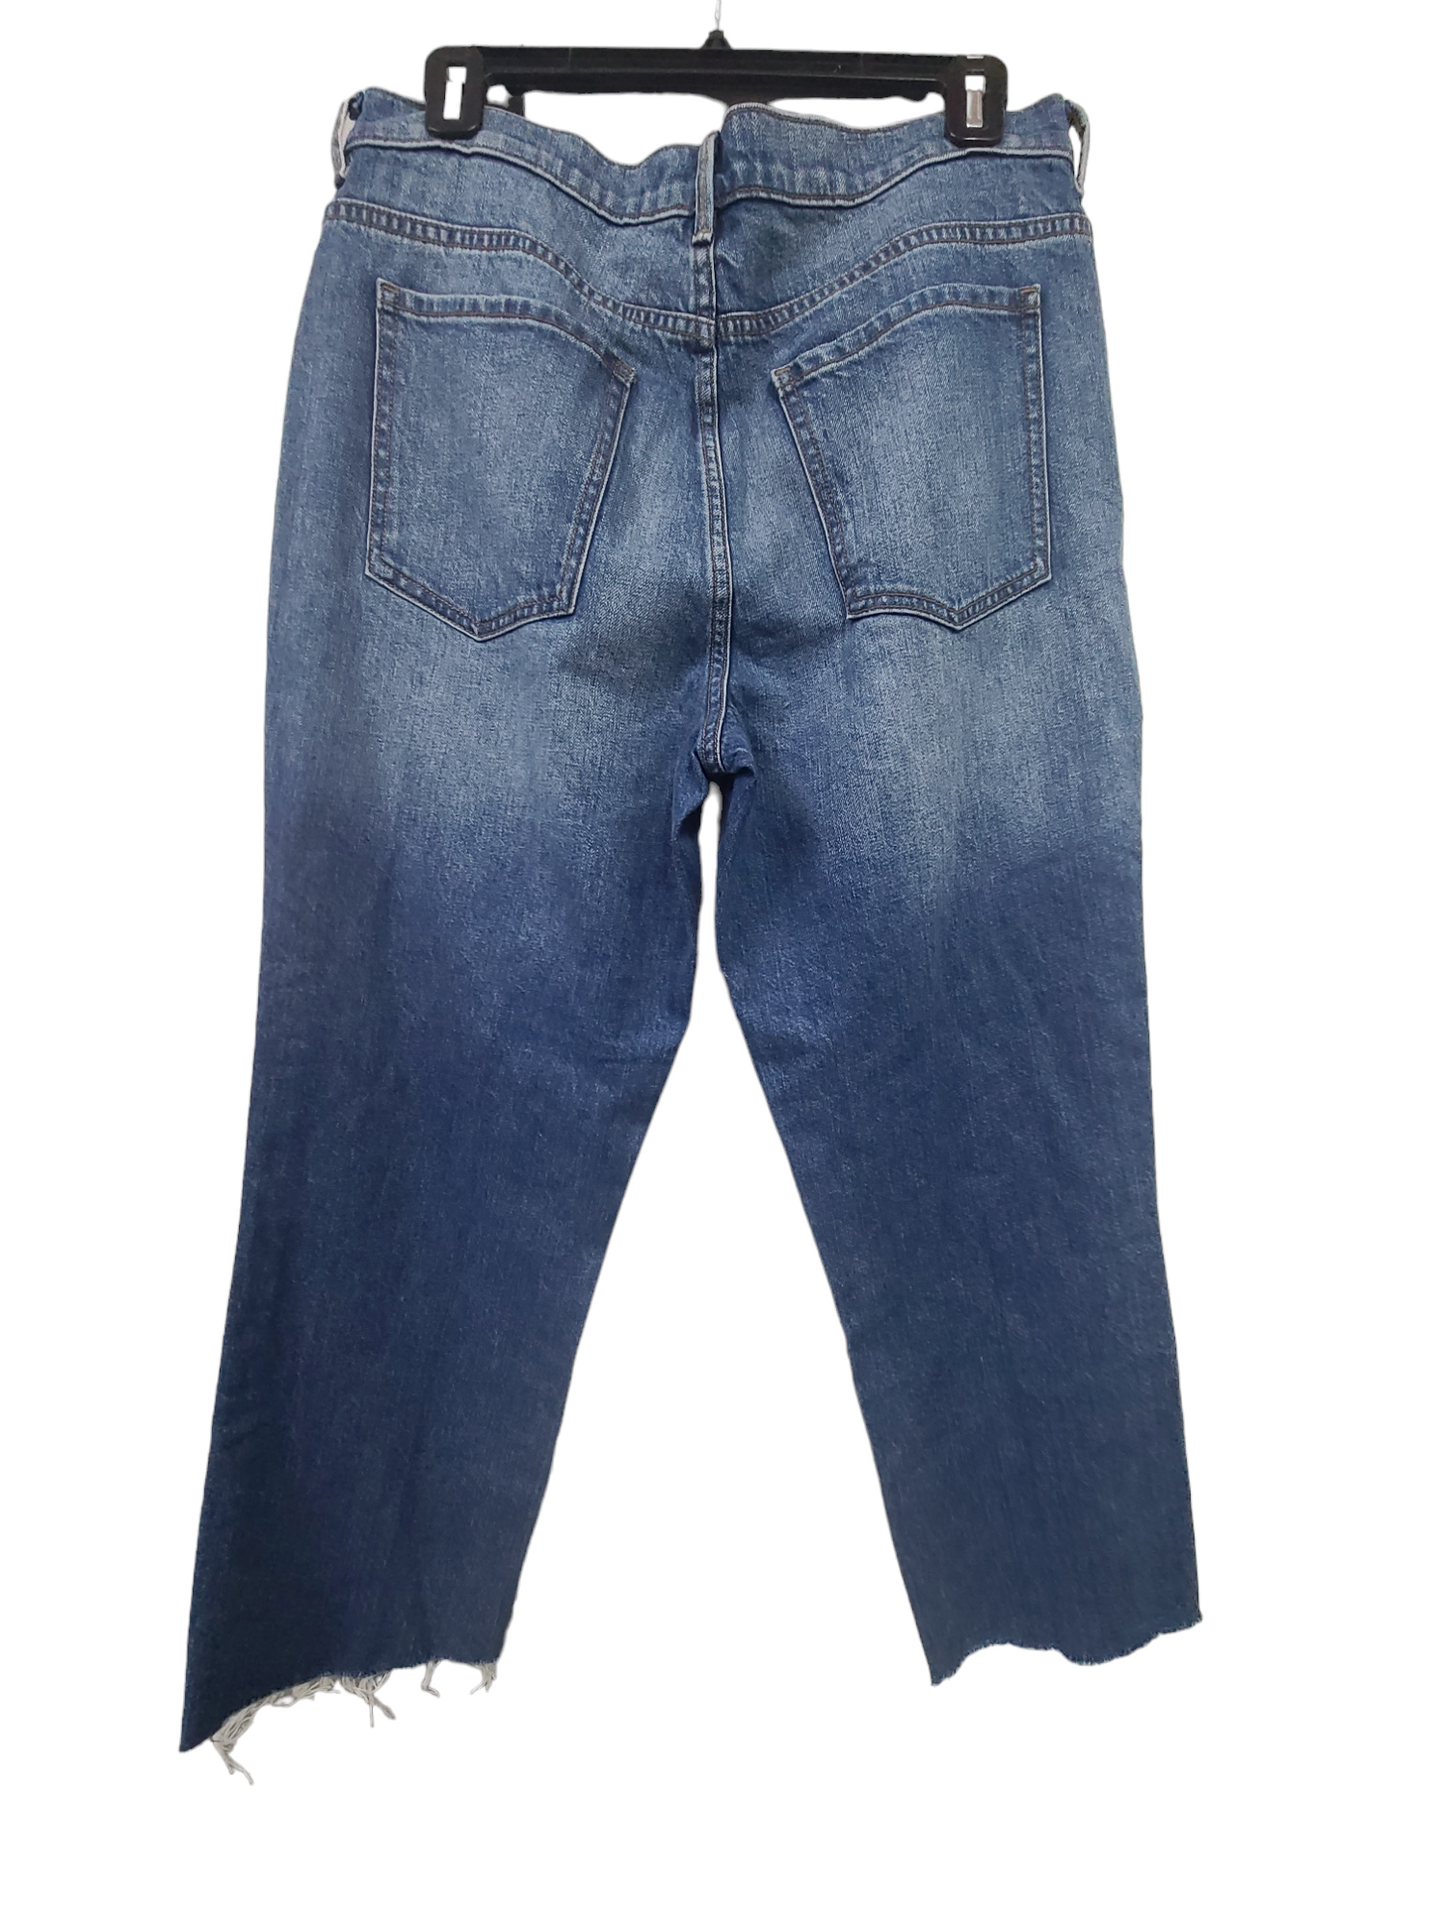 Banana Republic Premium Denim Vintage Straight Women's Jeans Blue - Size 30